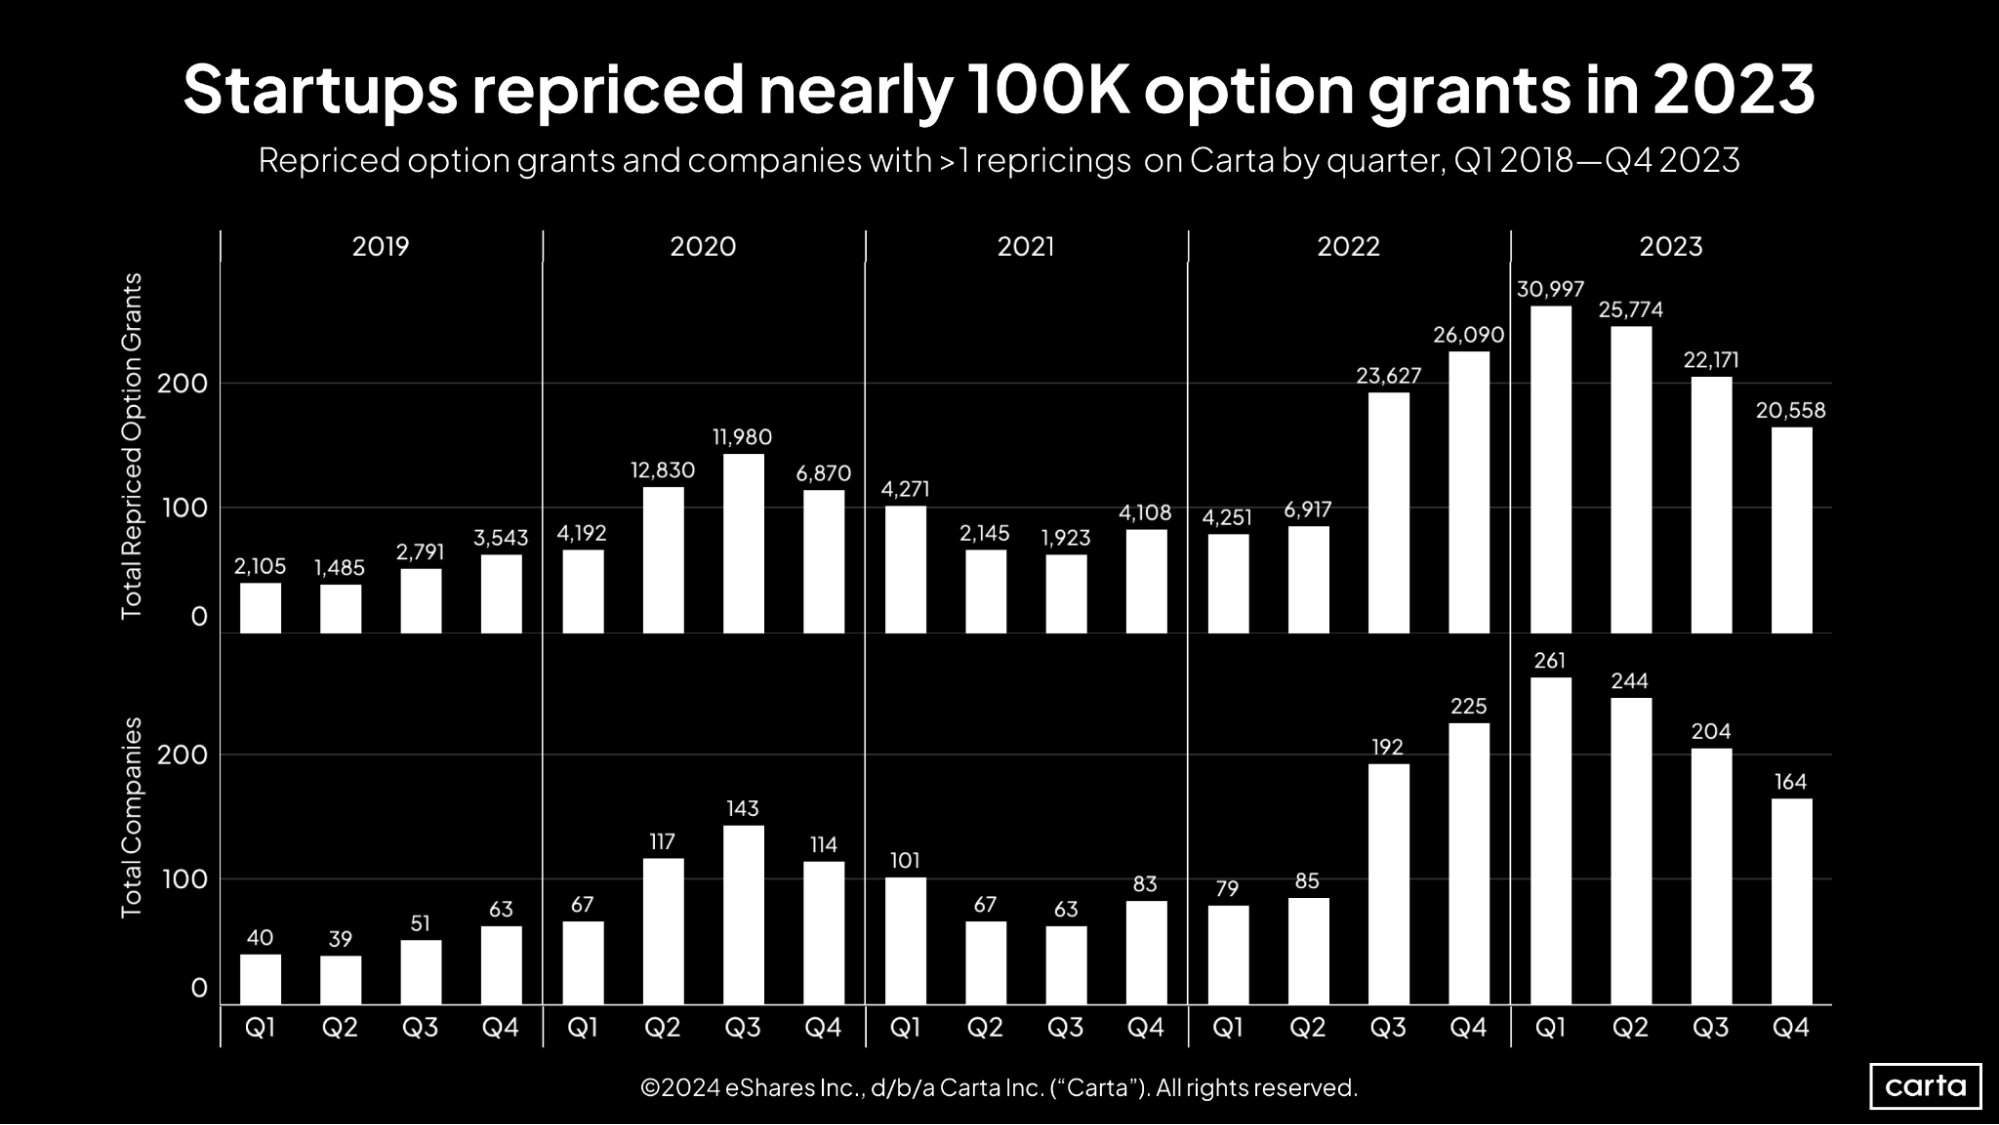 Carta SOPM Q4 2023 Startups repriced nearly 100K option grants in 2023